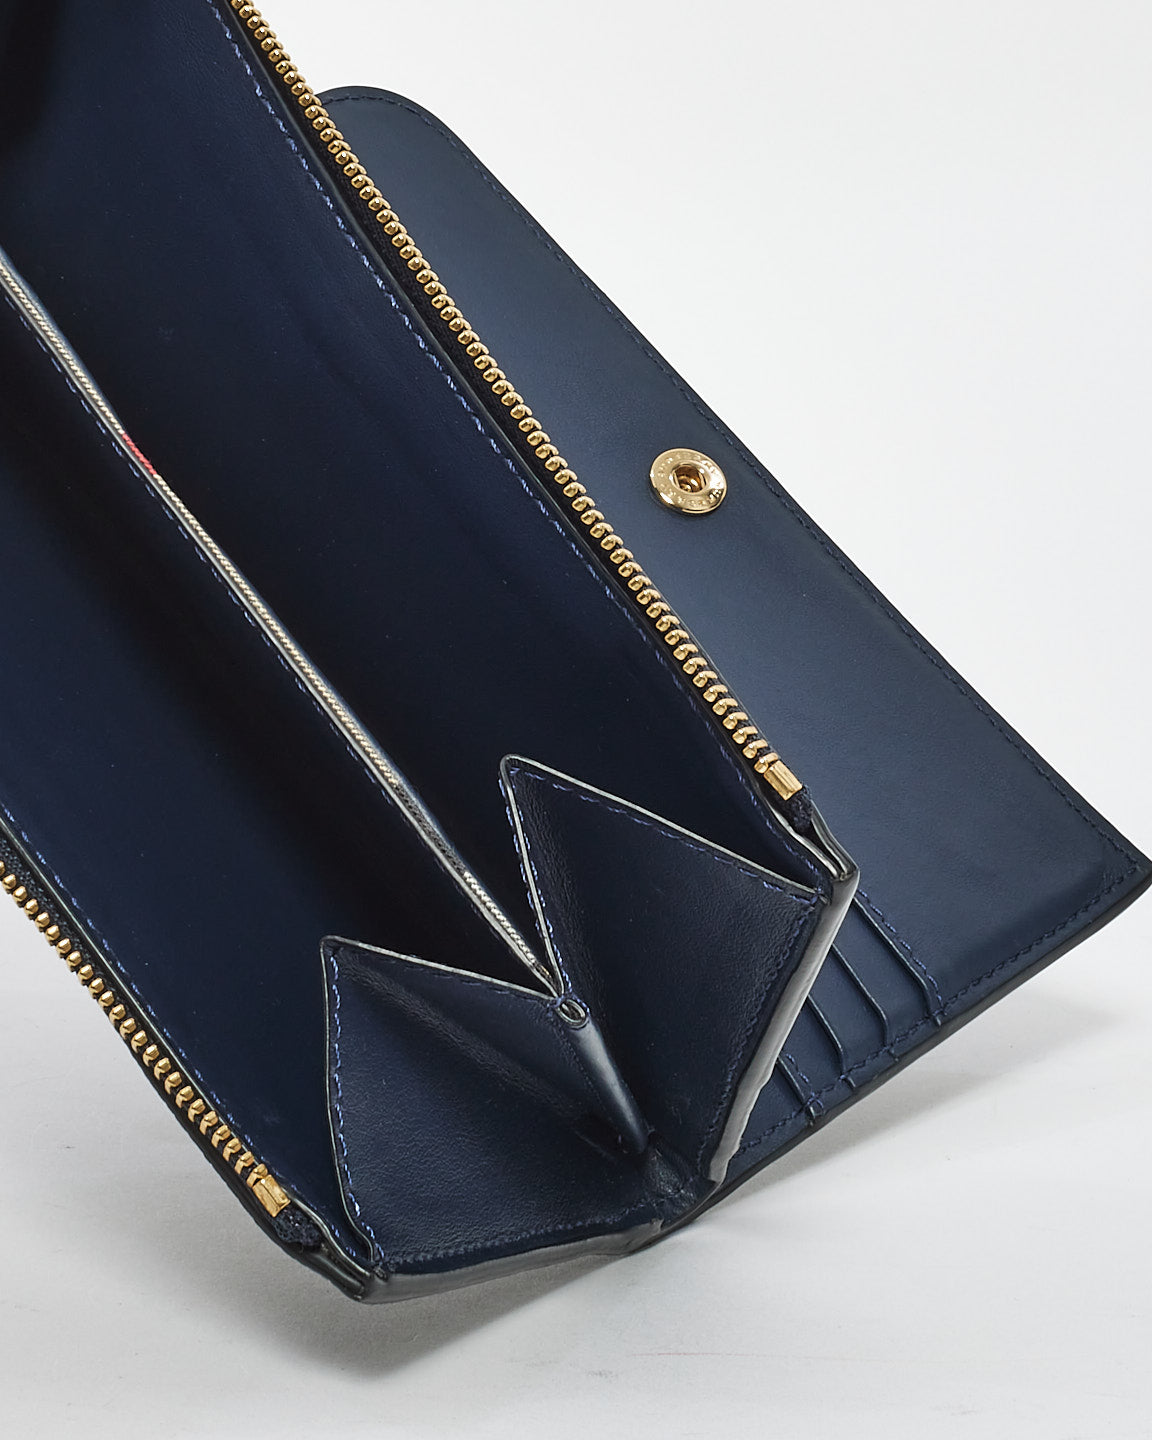 Burberry Navy Leather Long Zip Wallet